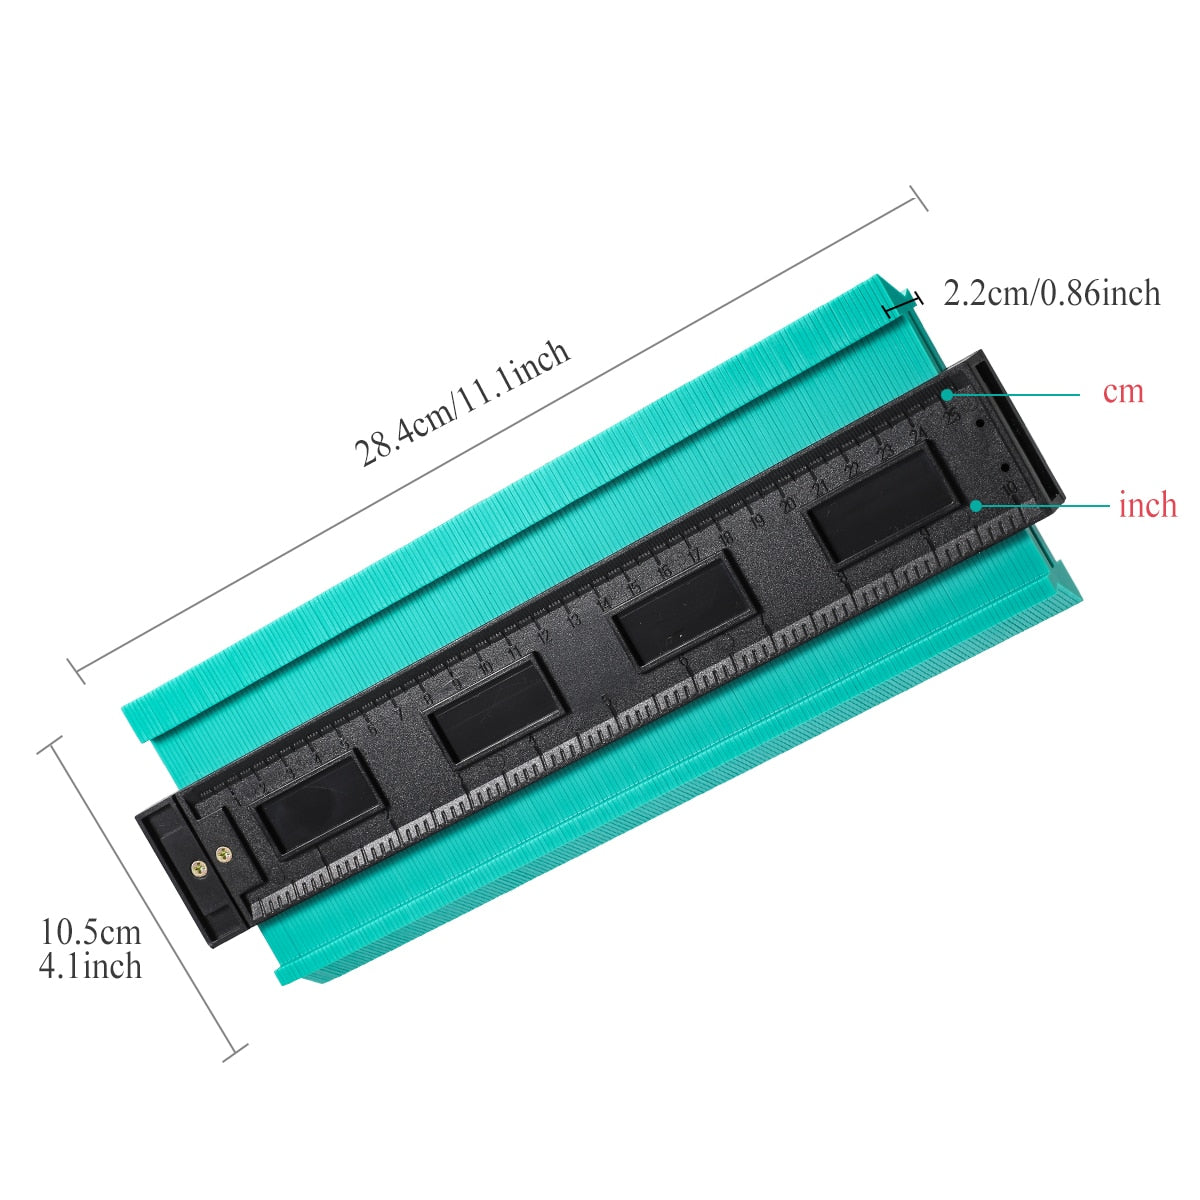 14/25/50cm Contour Gauge Plastic Profile Copy Contour Gauges Standard Wood Marking Tool